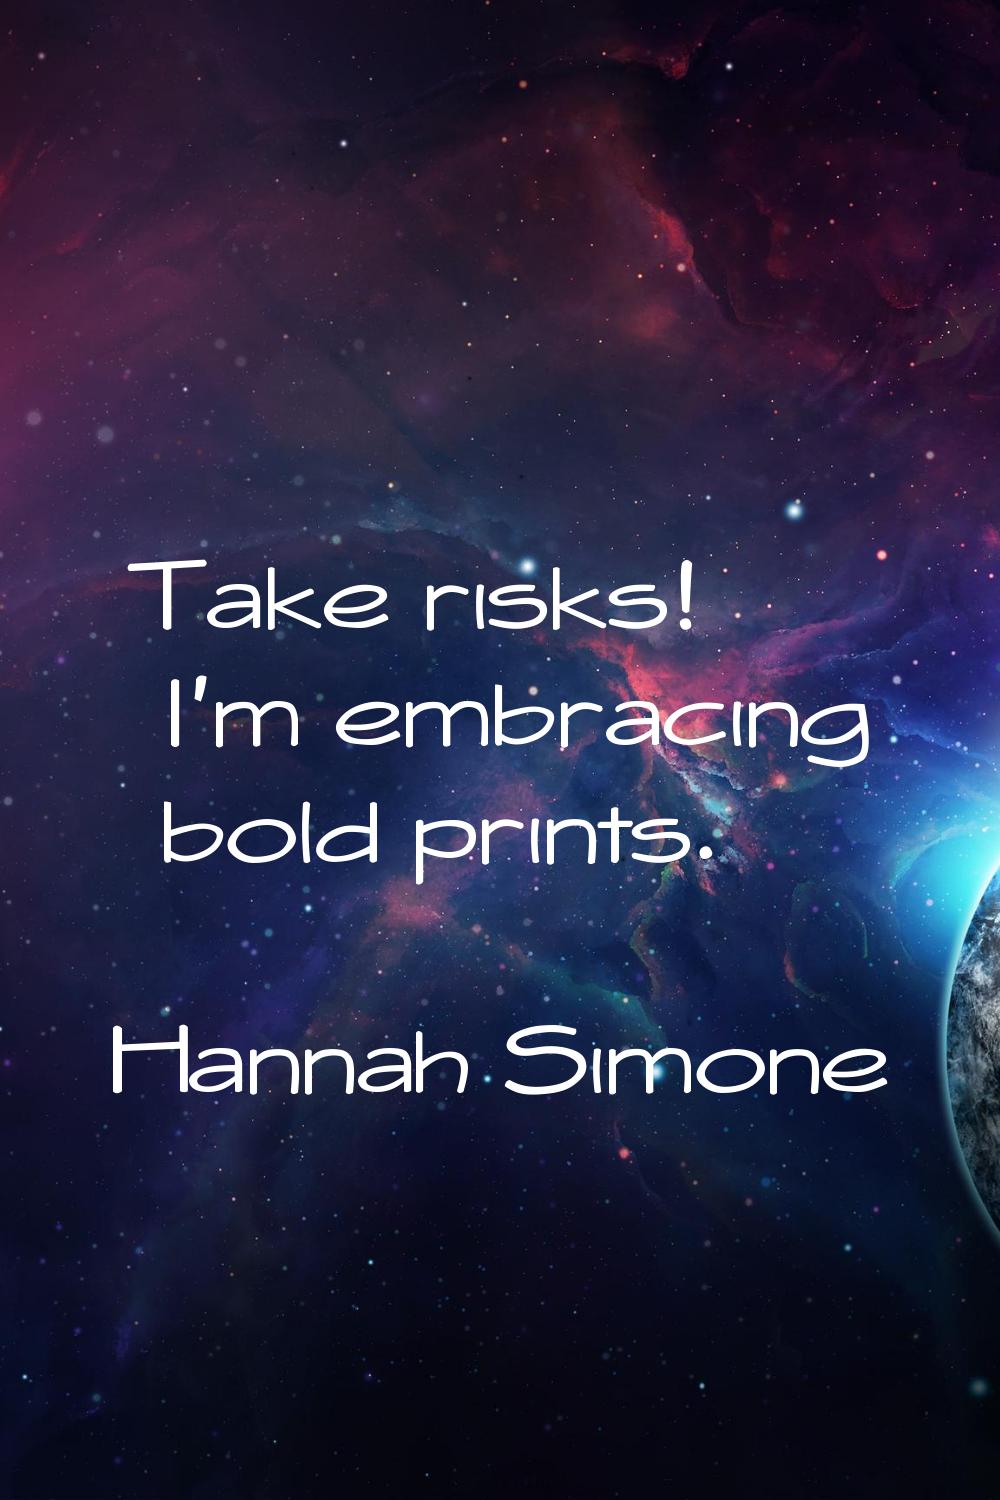 Take risks! I'm embracing bold prints.